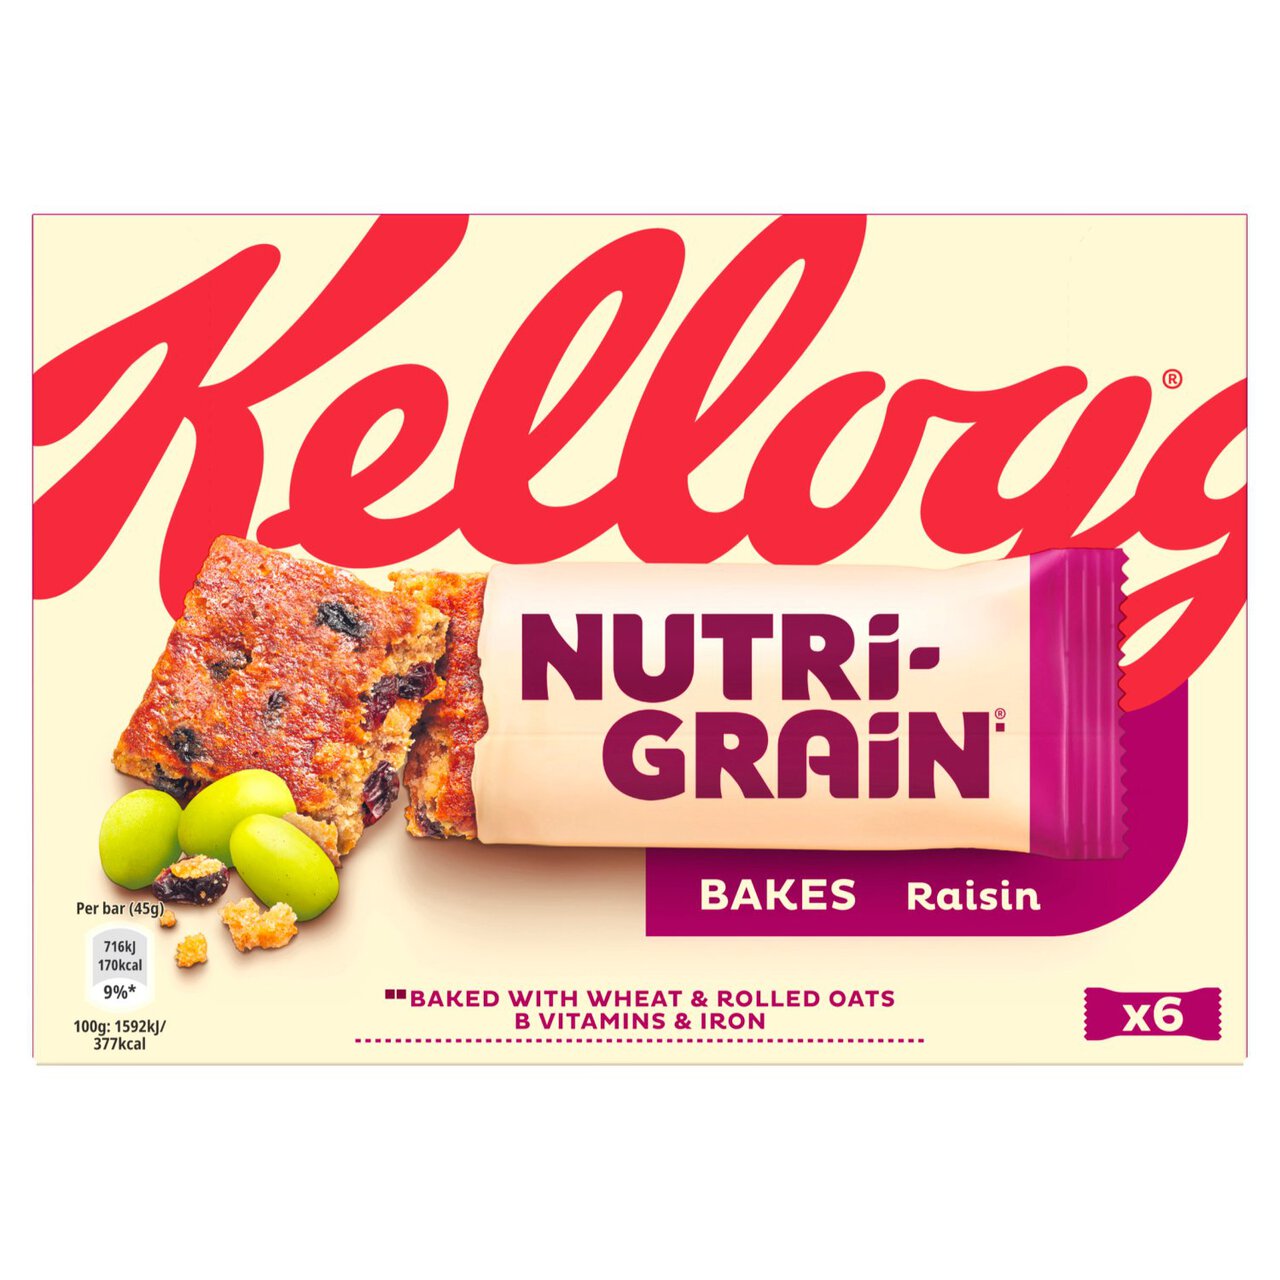 Kellogg's Nutri-Grain Elevenses Bars Raisin Bakes 6 per pack